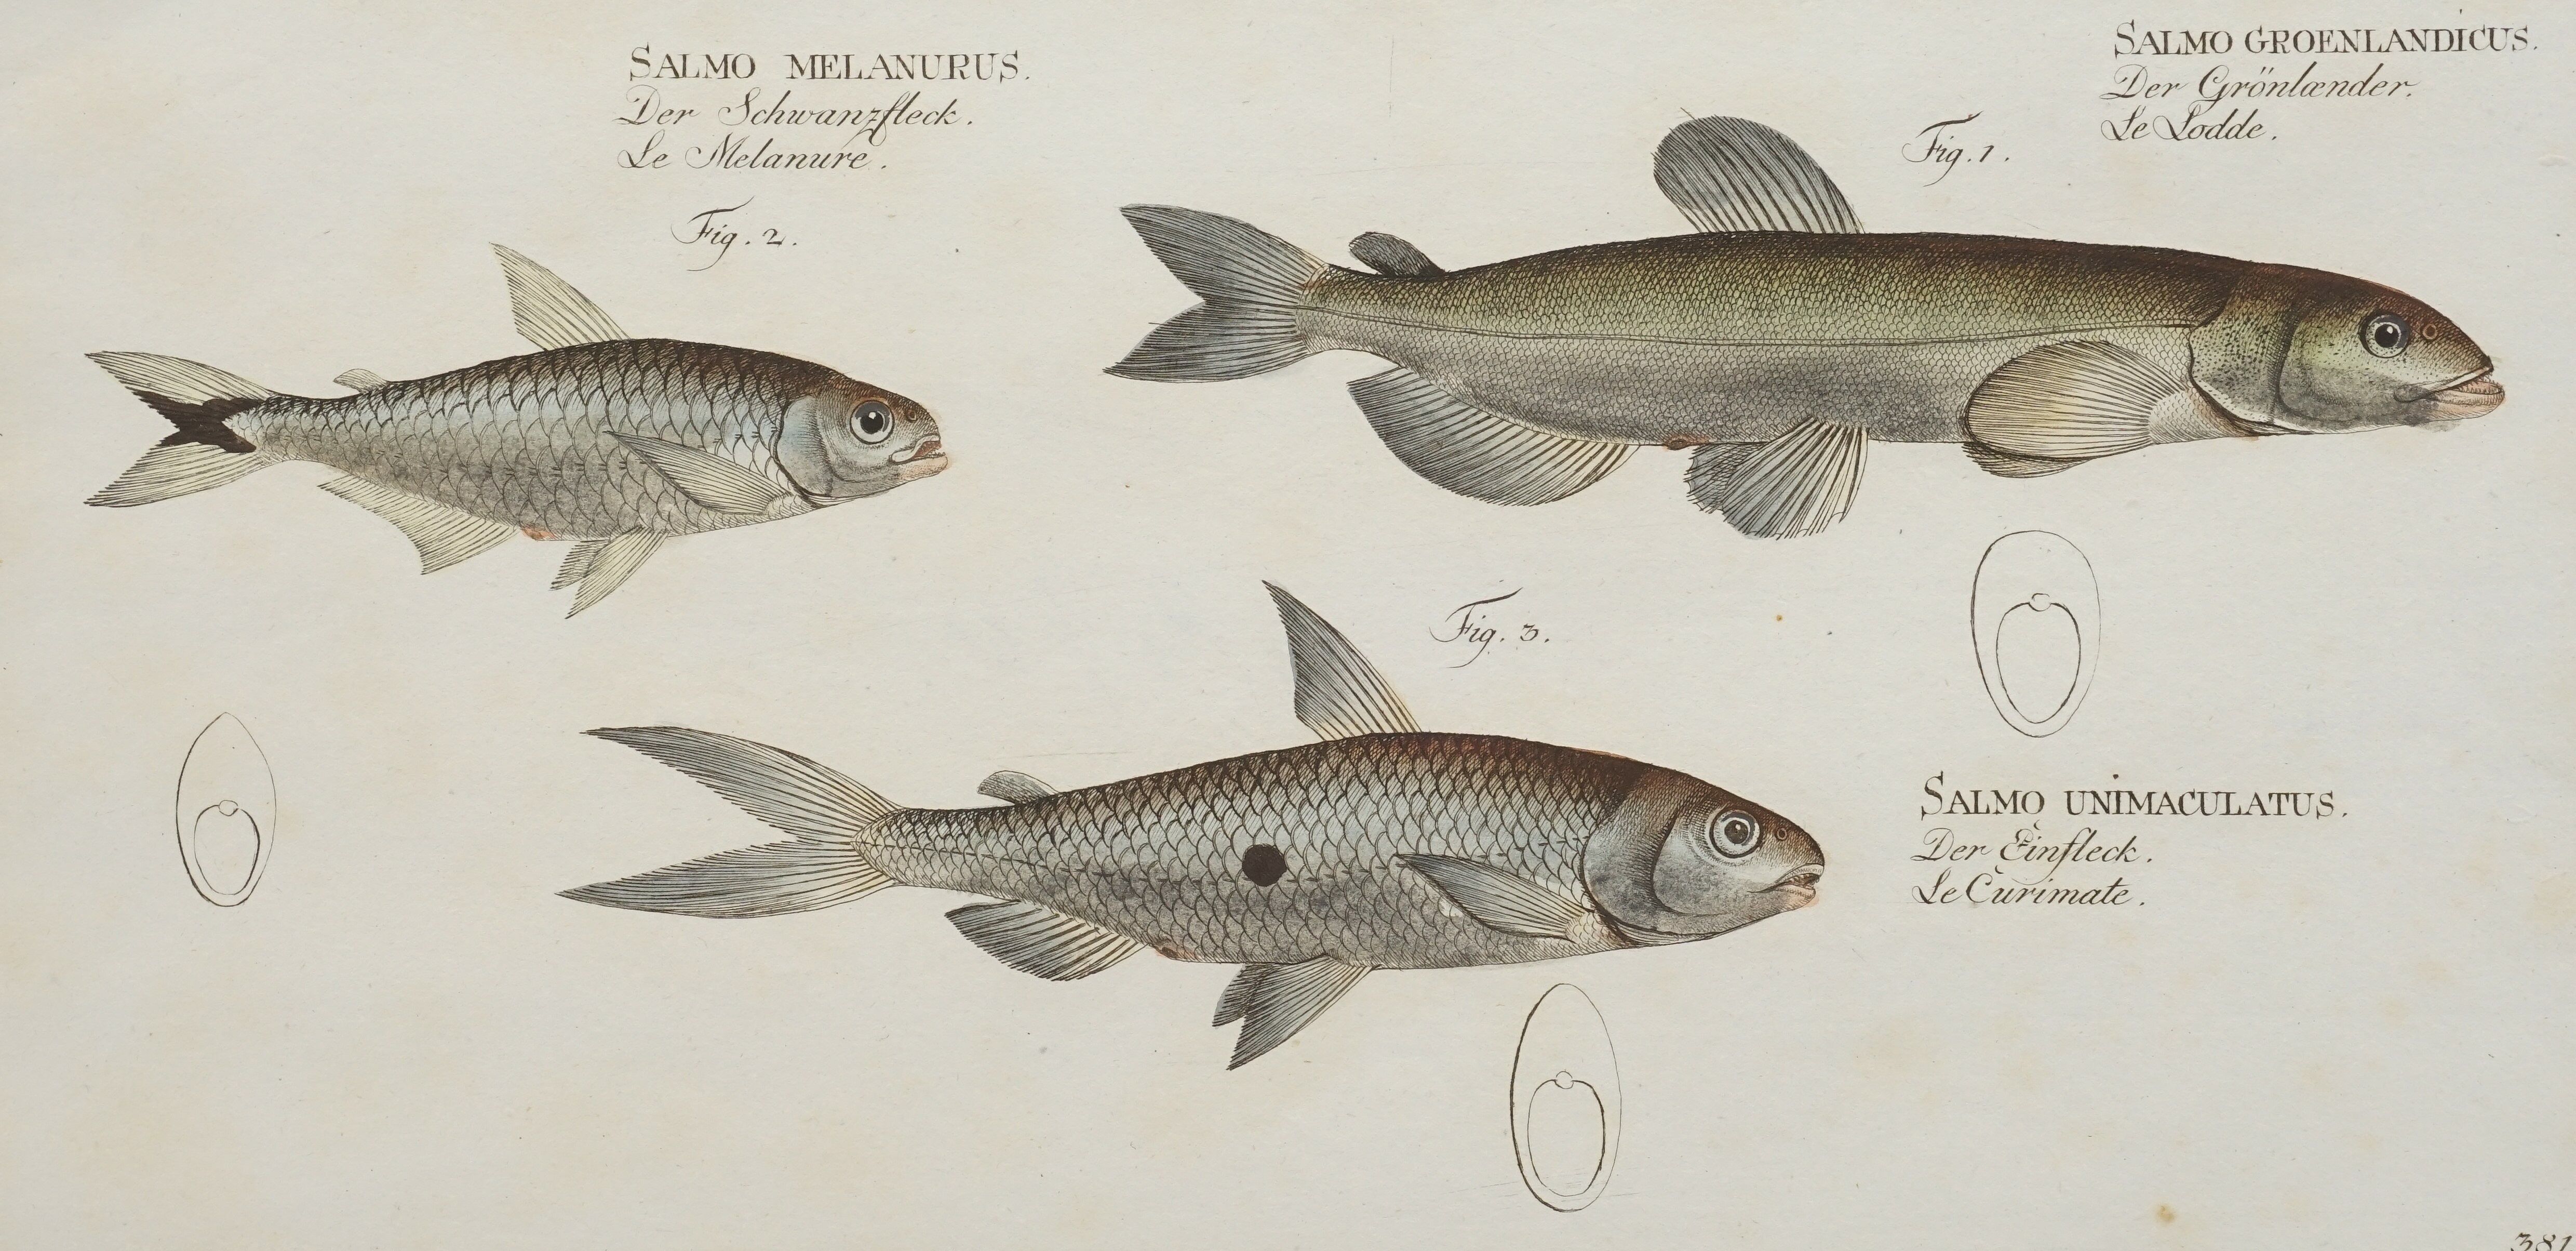 Johann Friedrich Hennig, Lachse Johann Friedrich Hennig (1750-1814), Salmon